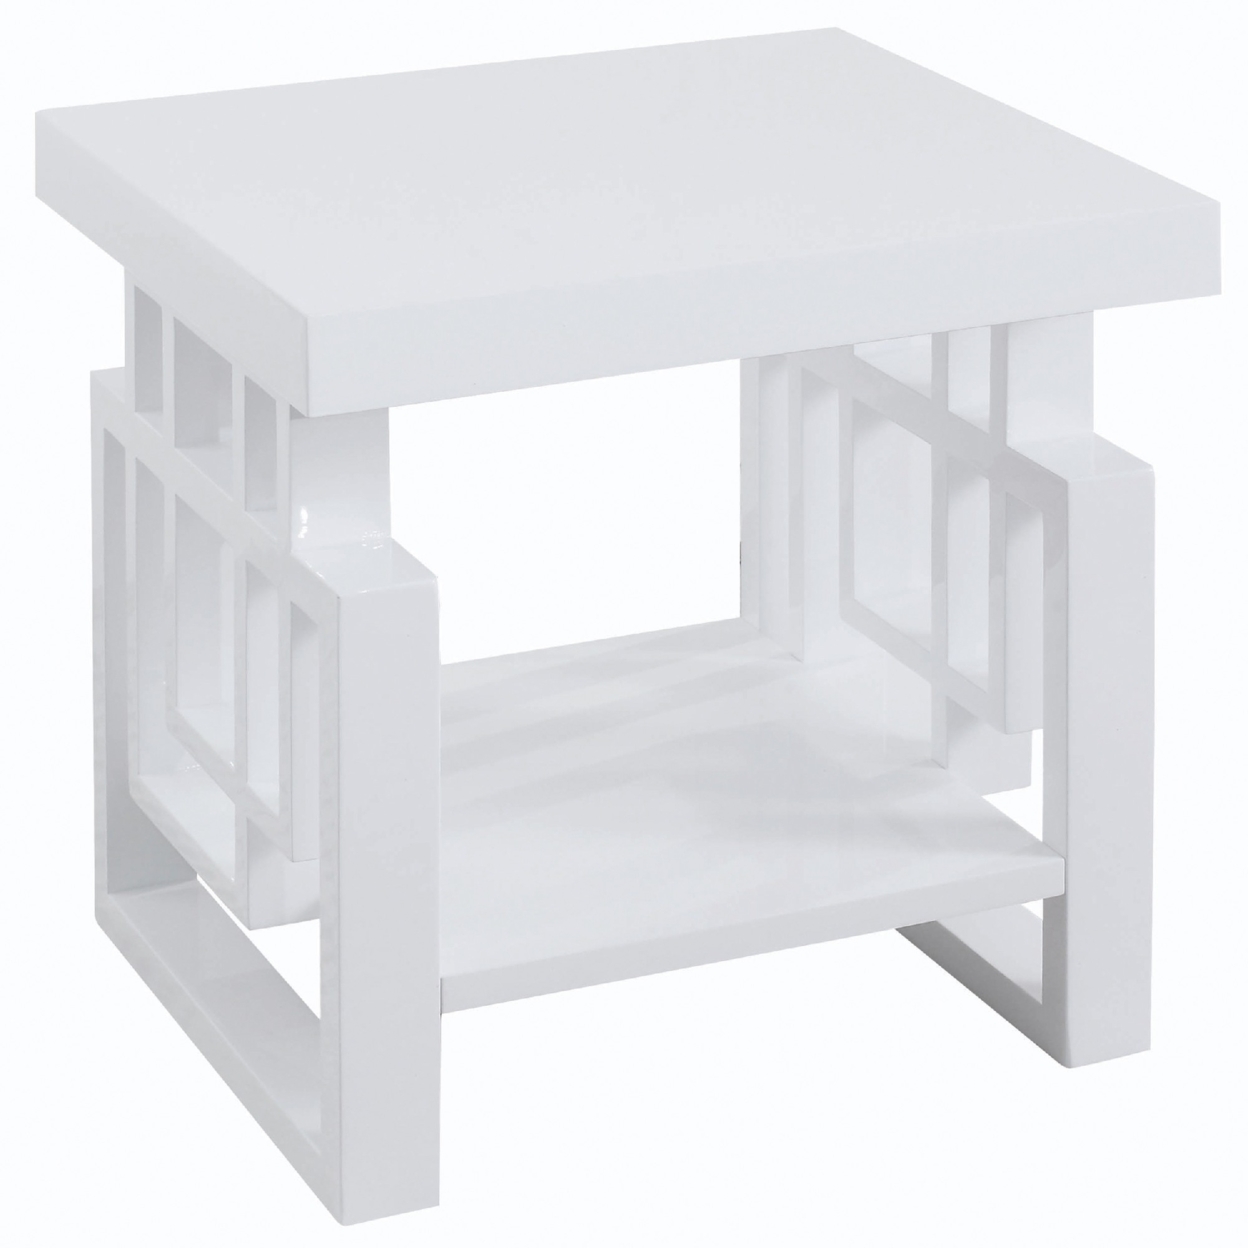 22 Inch Wood End Table, Geometric Frame, 1 Shelf, Glossy White- Saltoro Sherpi